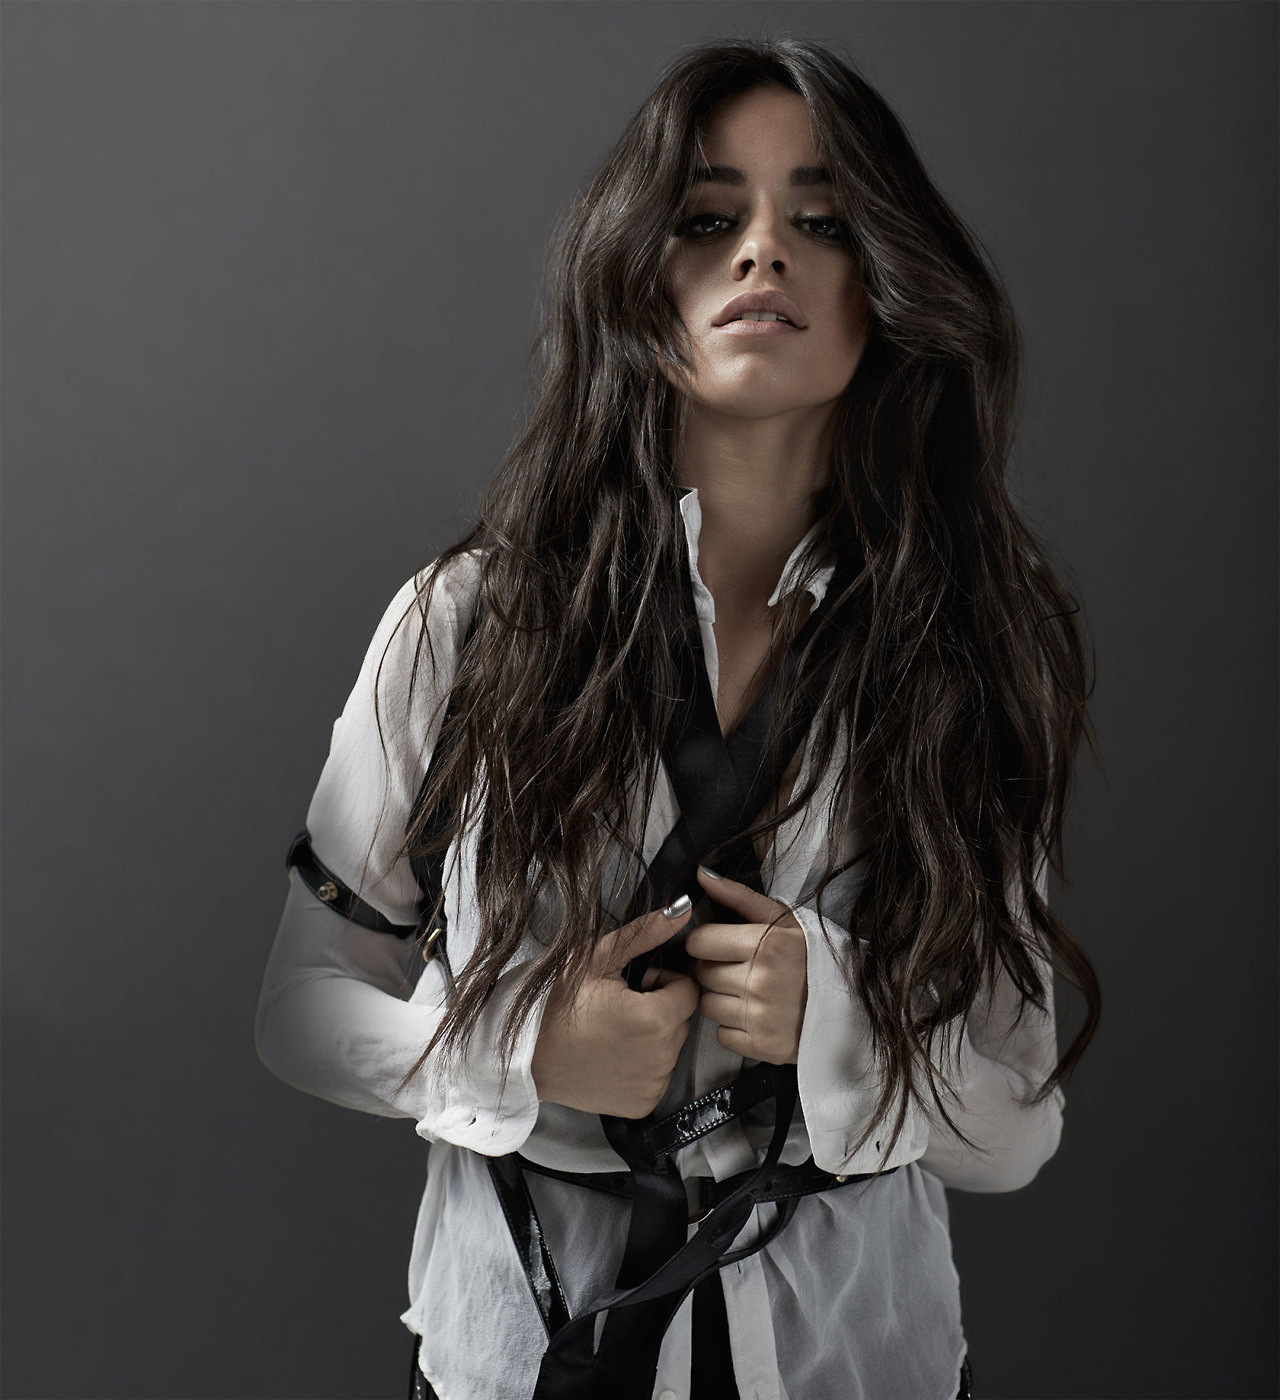 Camila Cabello photographed for Marie Claire.: Daily Camila Cabello1280 x 1400